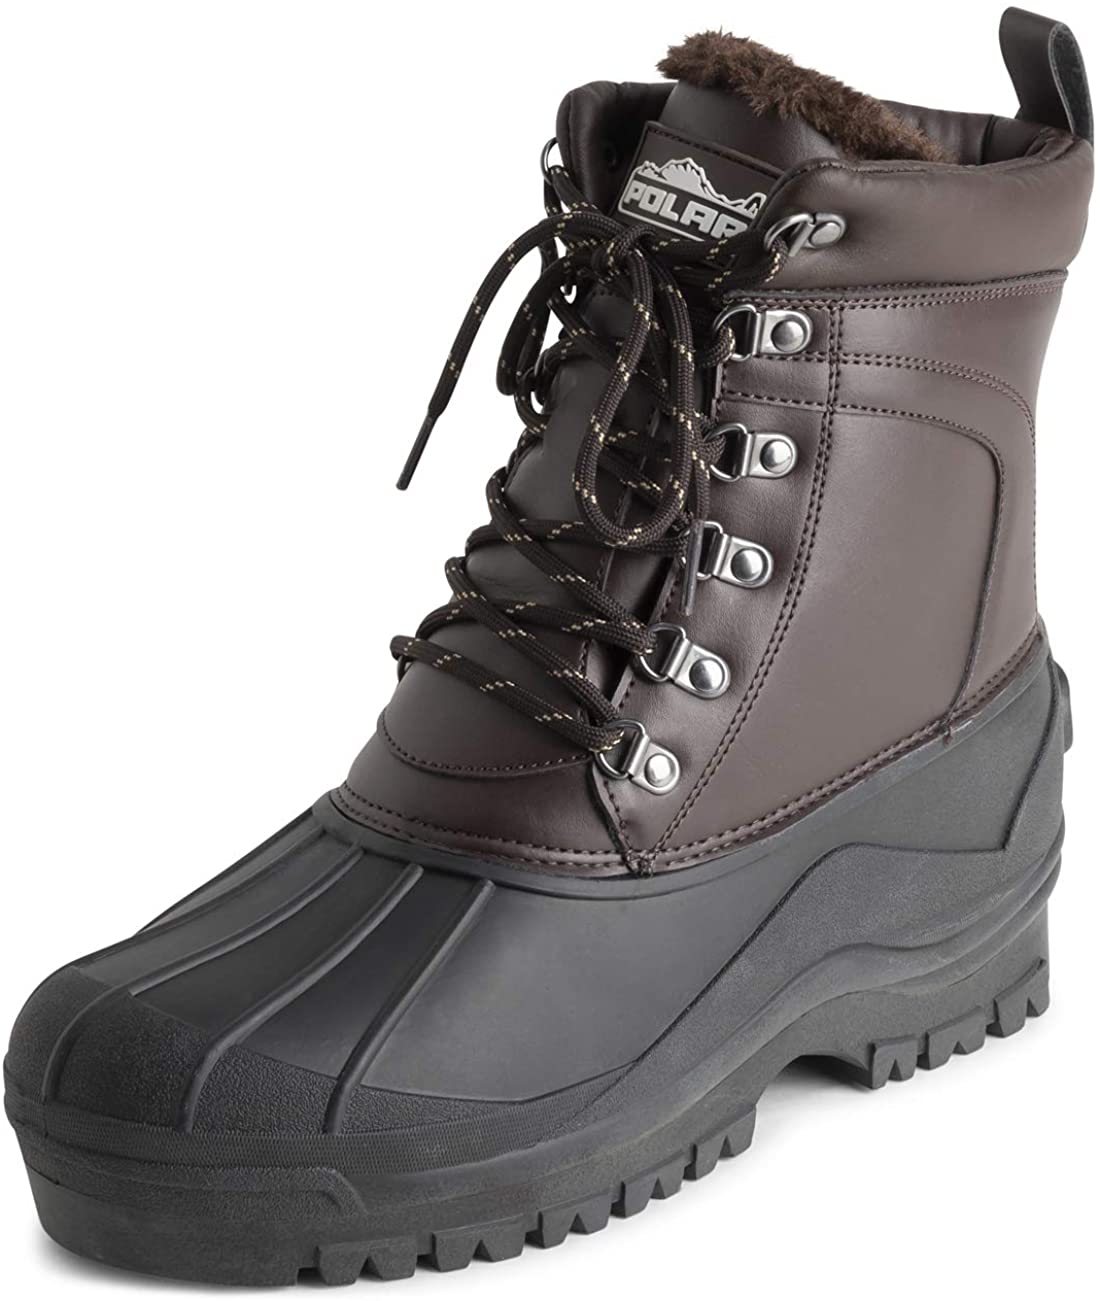 Men's Winter Boots Muck Lace Up Short Nylon Snow Rain Casual Size 12 M US Brown